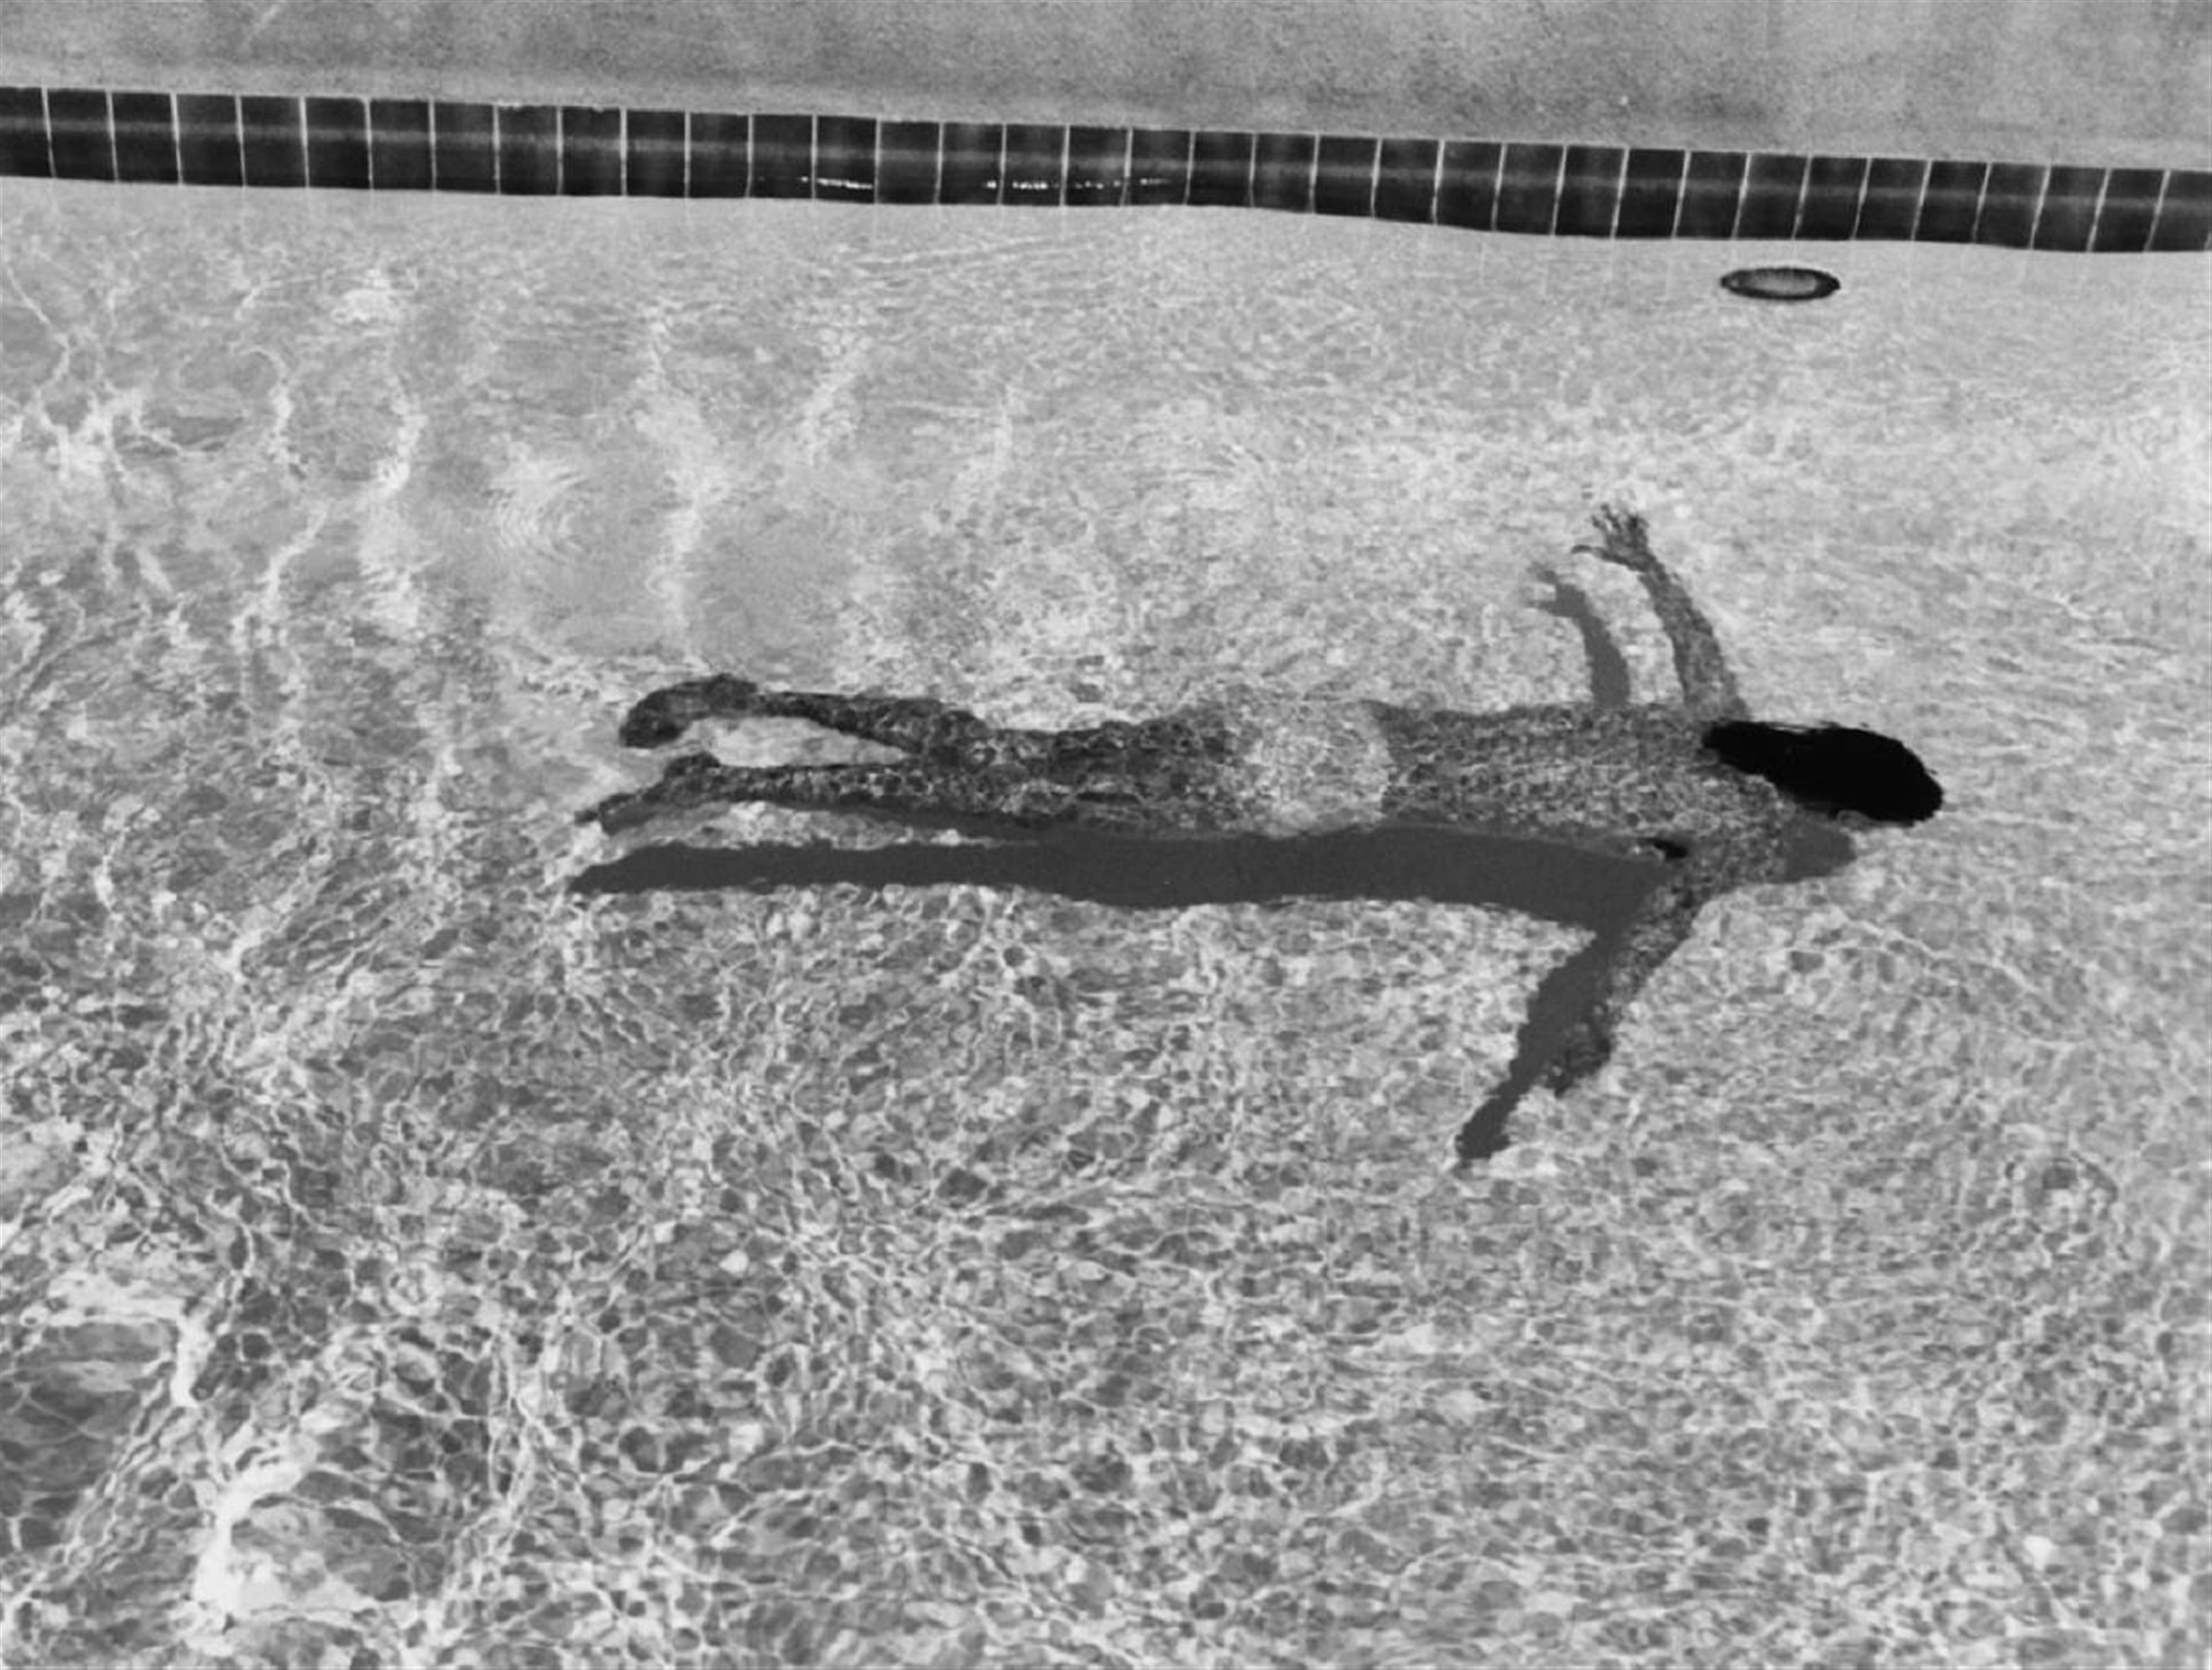 David Hockney - John St Clair Swimming - image-1